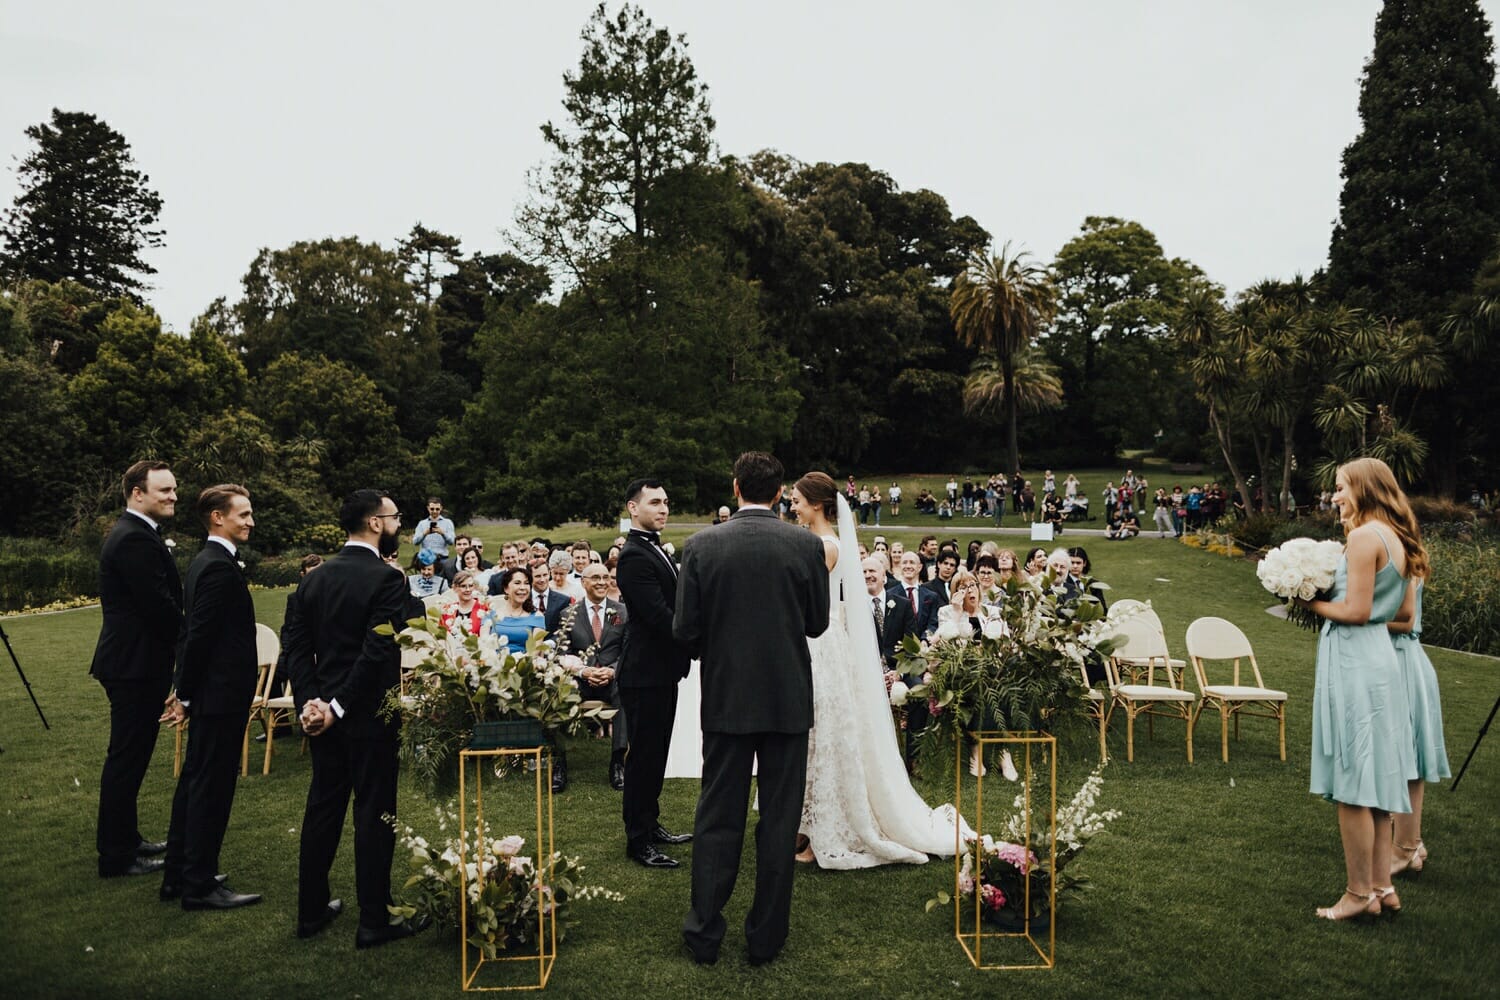 Intimate Garden Ceremony Royal Botanic Gardens Melbourne Wedding Photographer